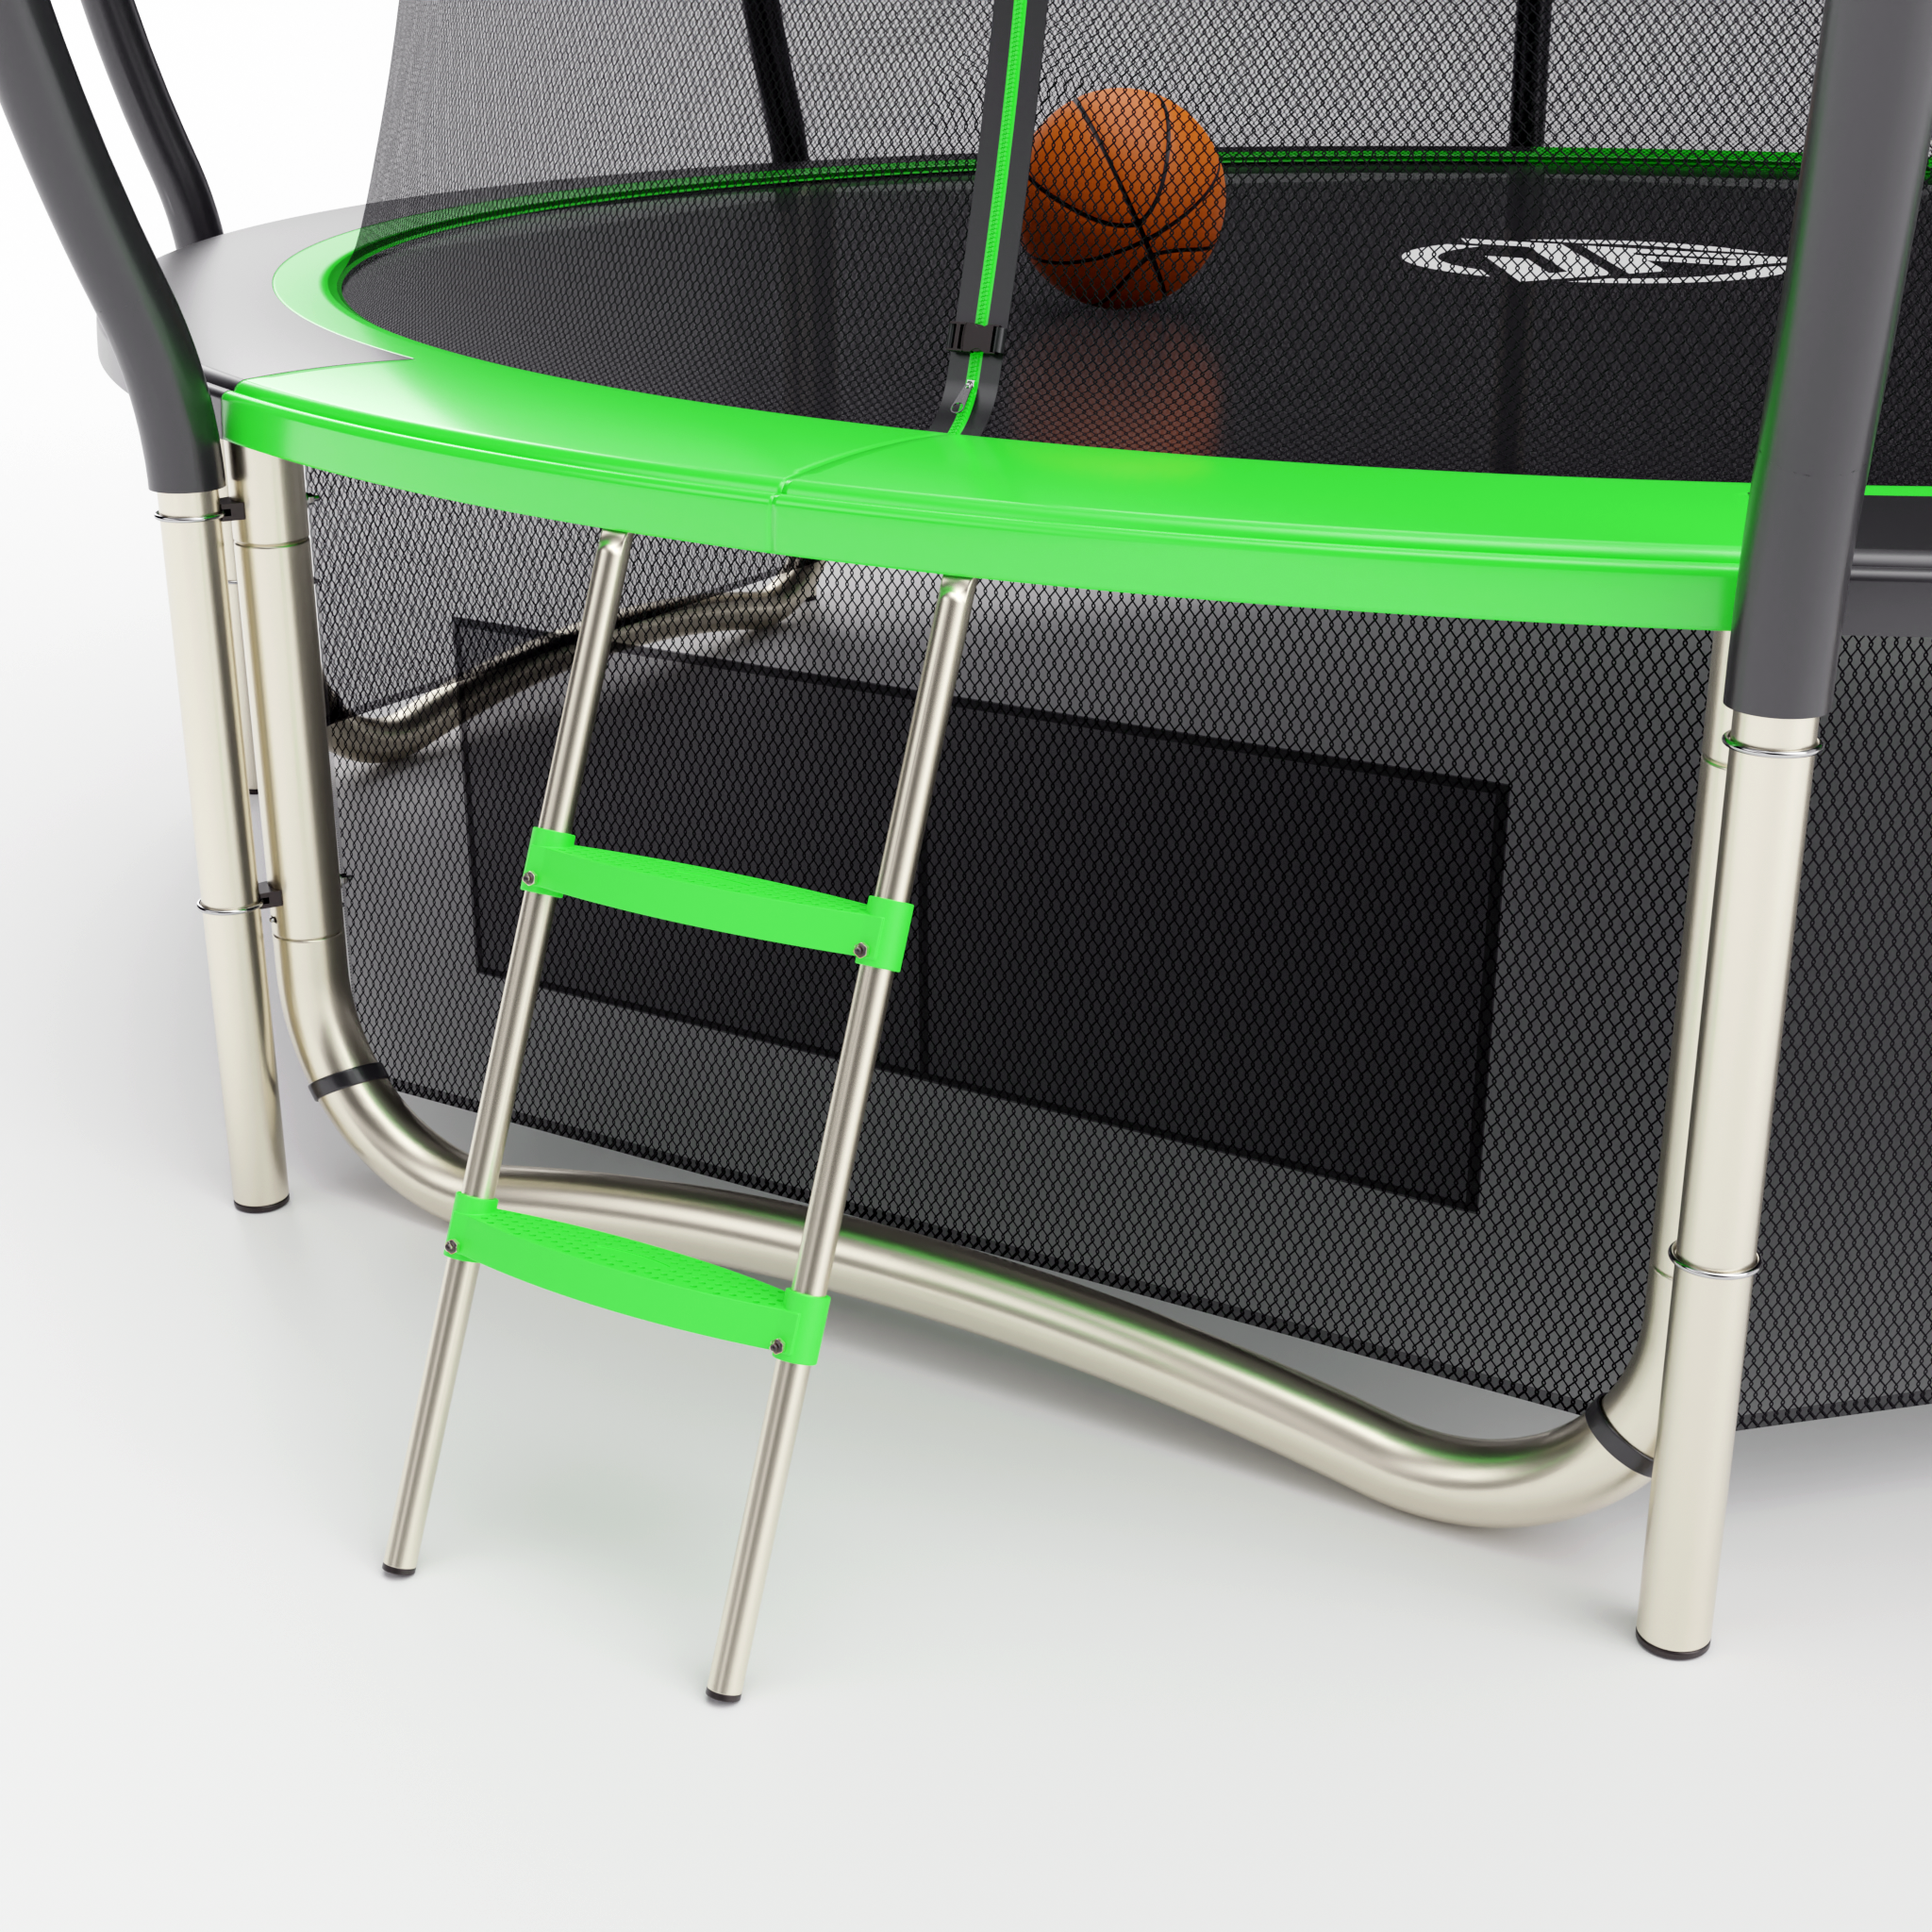 Фото 4 - Батут Jump Power 14 ft Pro Inside Basket Green.